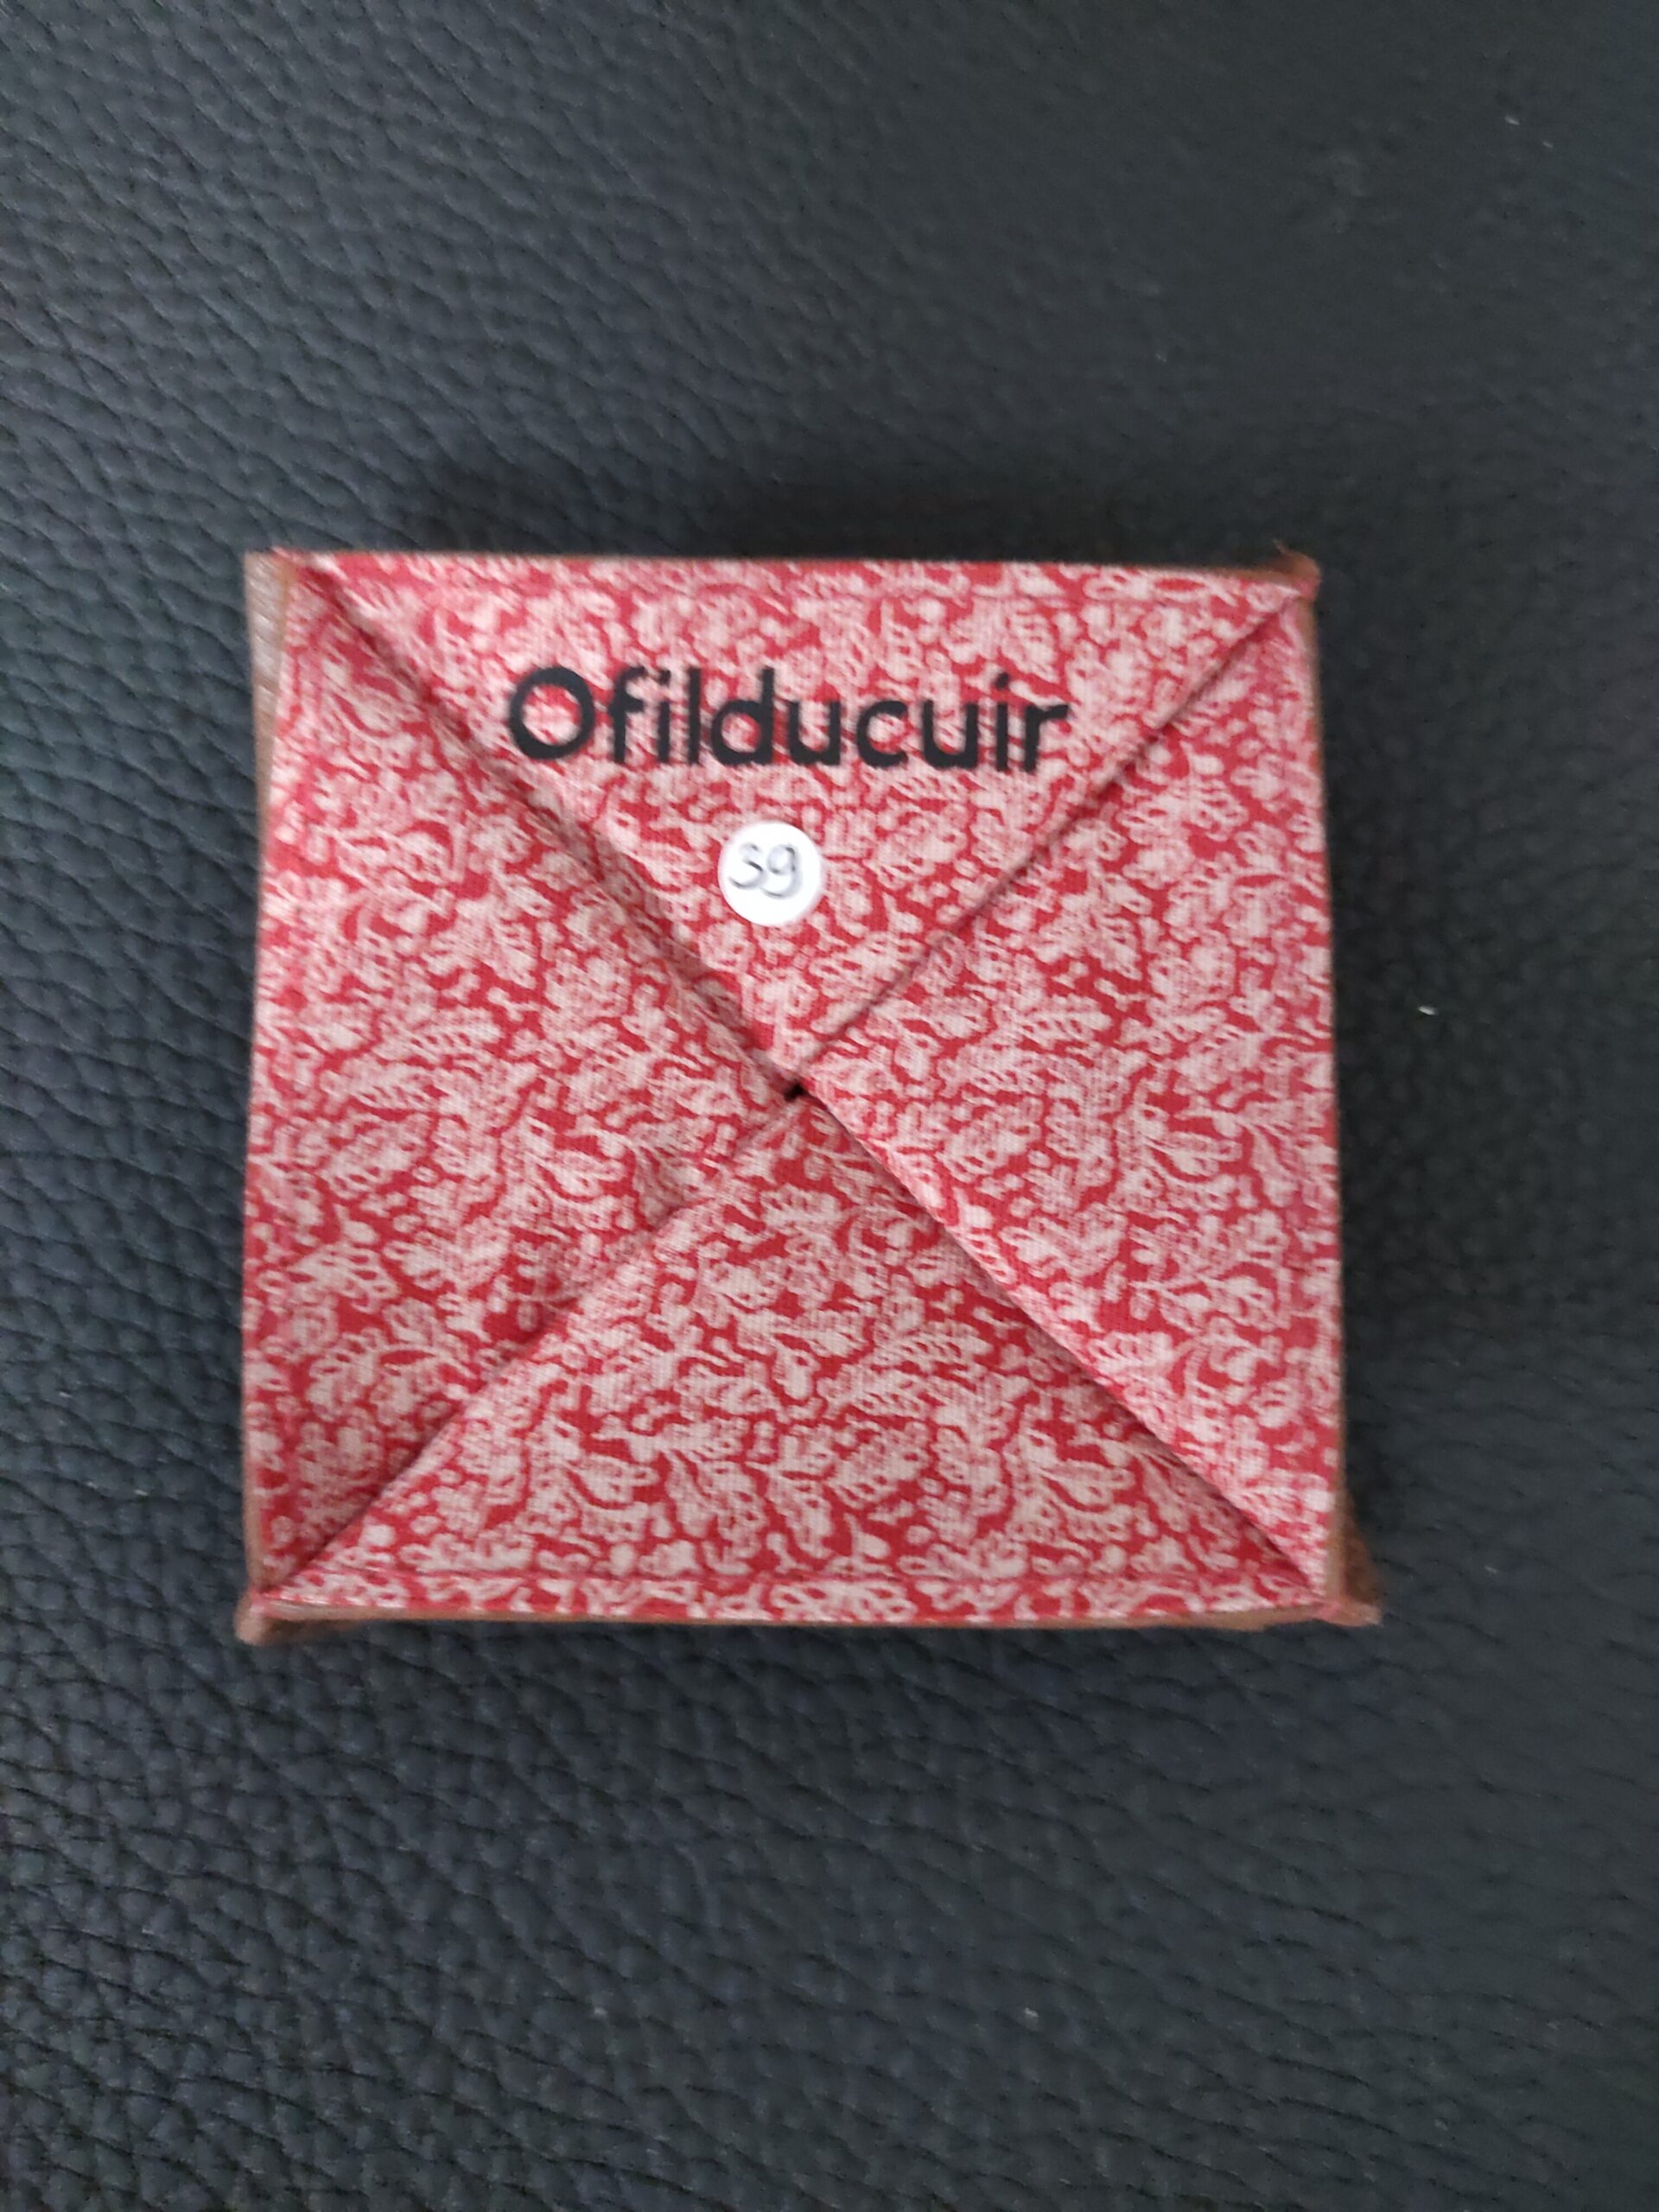 Porte monnaie origami en cuir brique doublé tissu africain ofilducuir zoulou